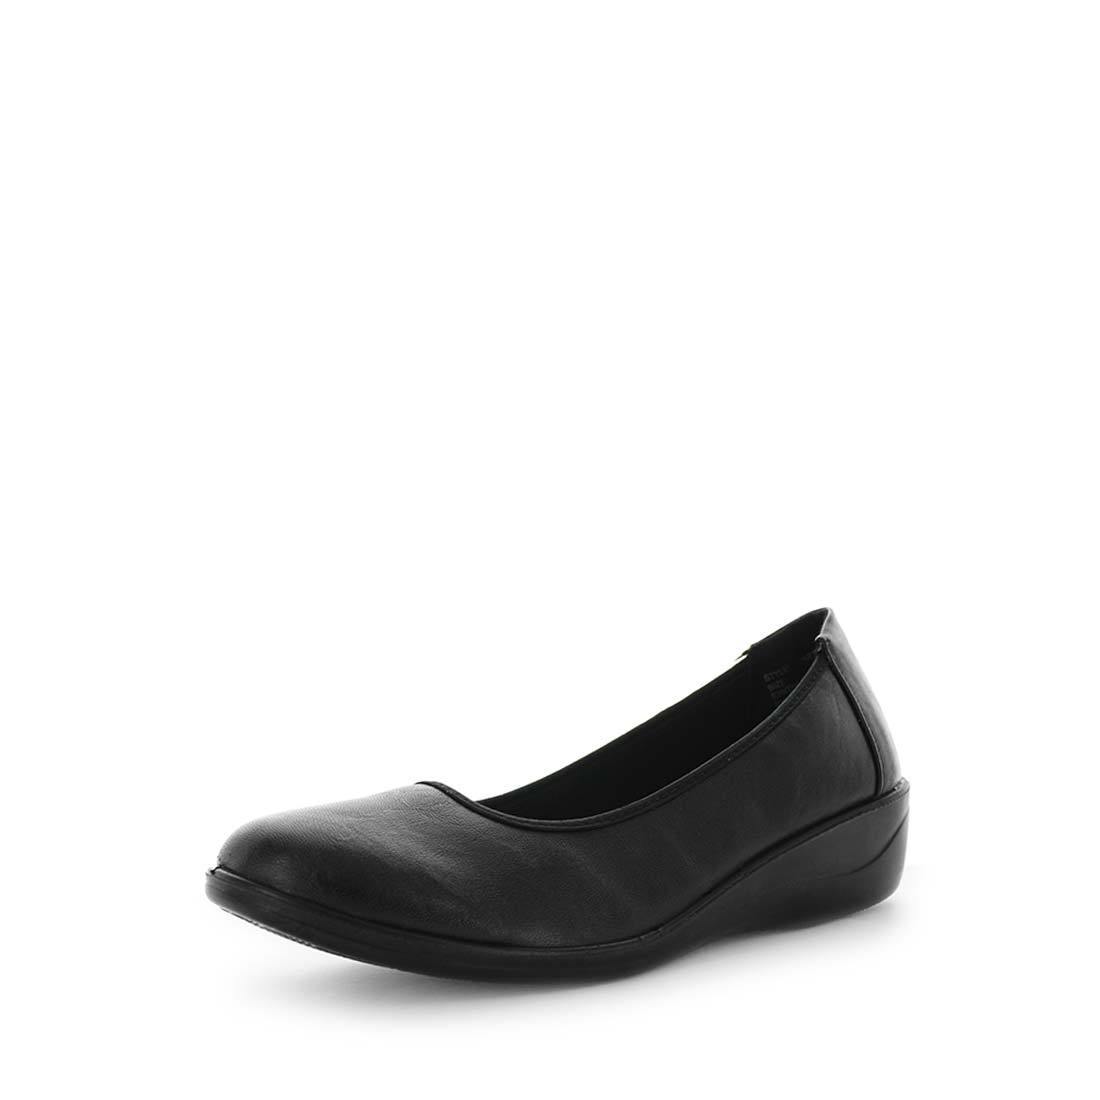 MARTI by AEROCUSHION - iShoes - Women's Shoes, Women's Shoes: Flats, Women's Shoes: Women's Work Shoes - FOOTWEAR-FOOTWEAR